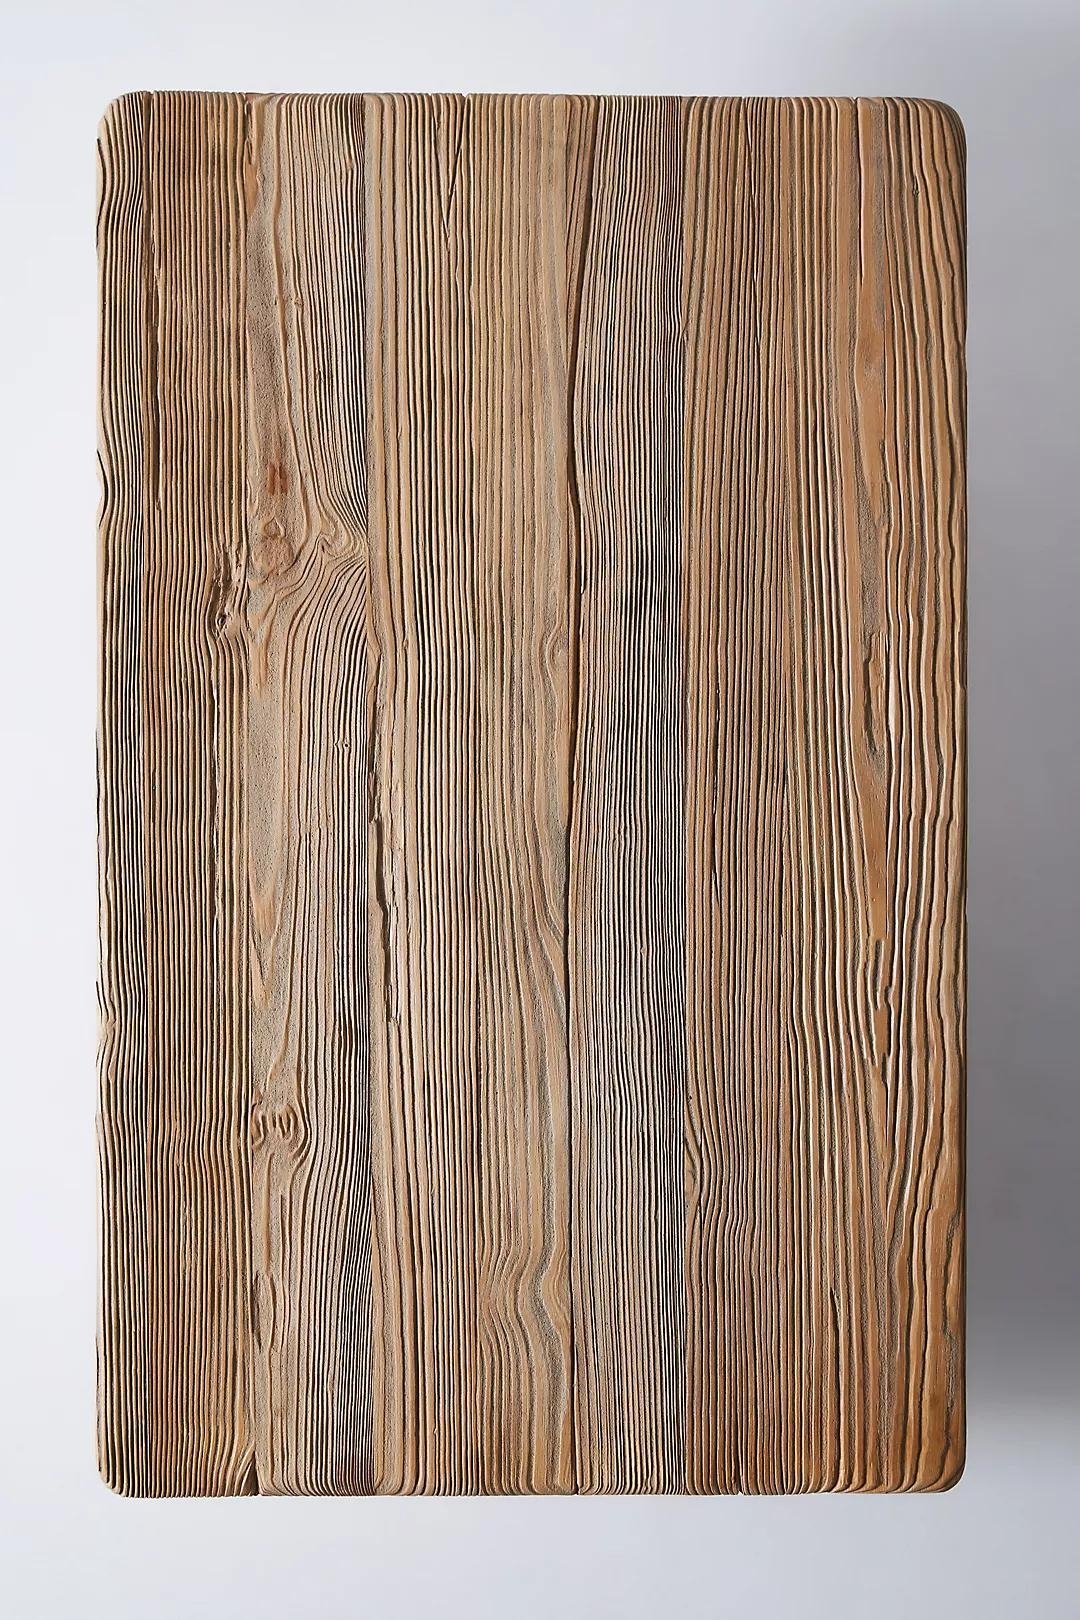 Margate Reclaimed Wood Coffee Table, Beige - Image 5